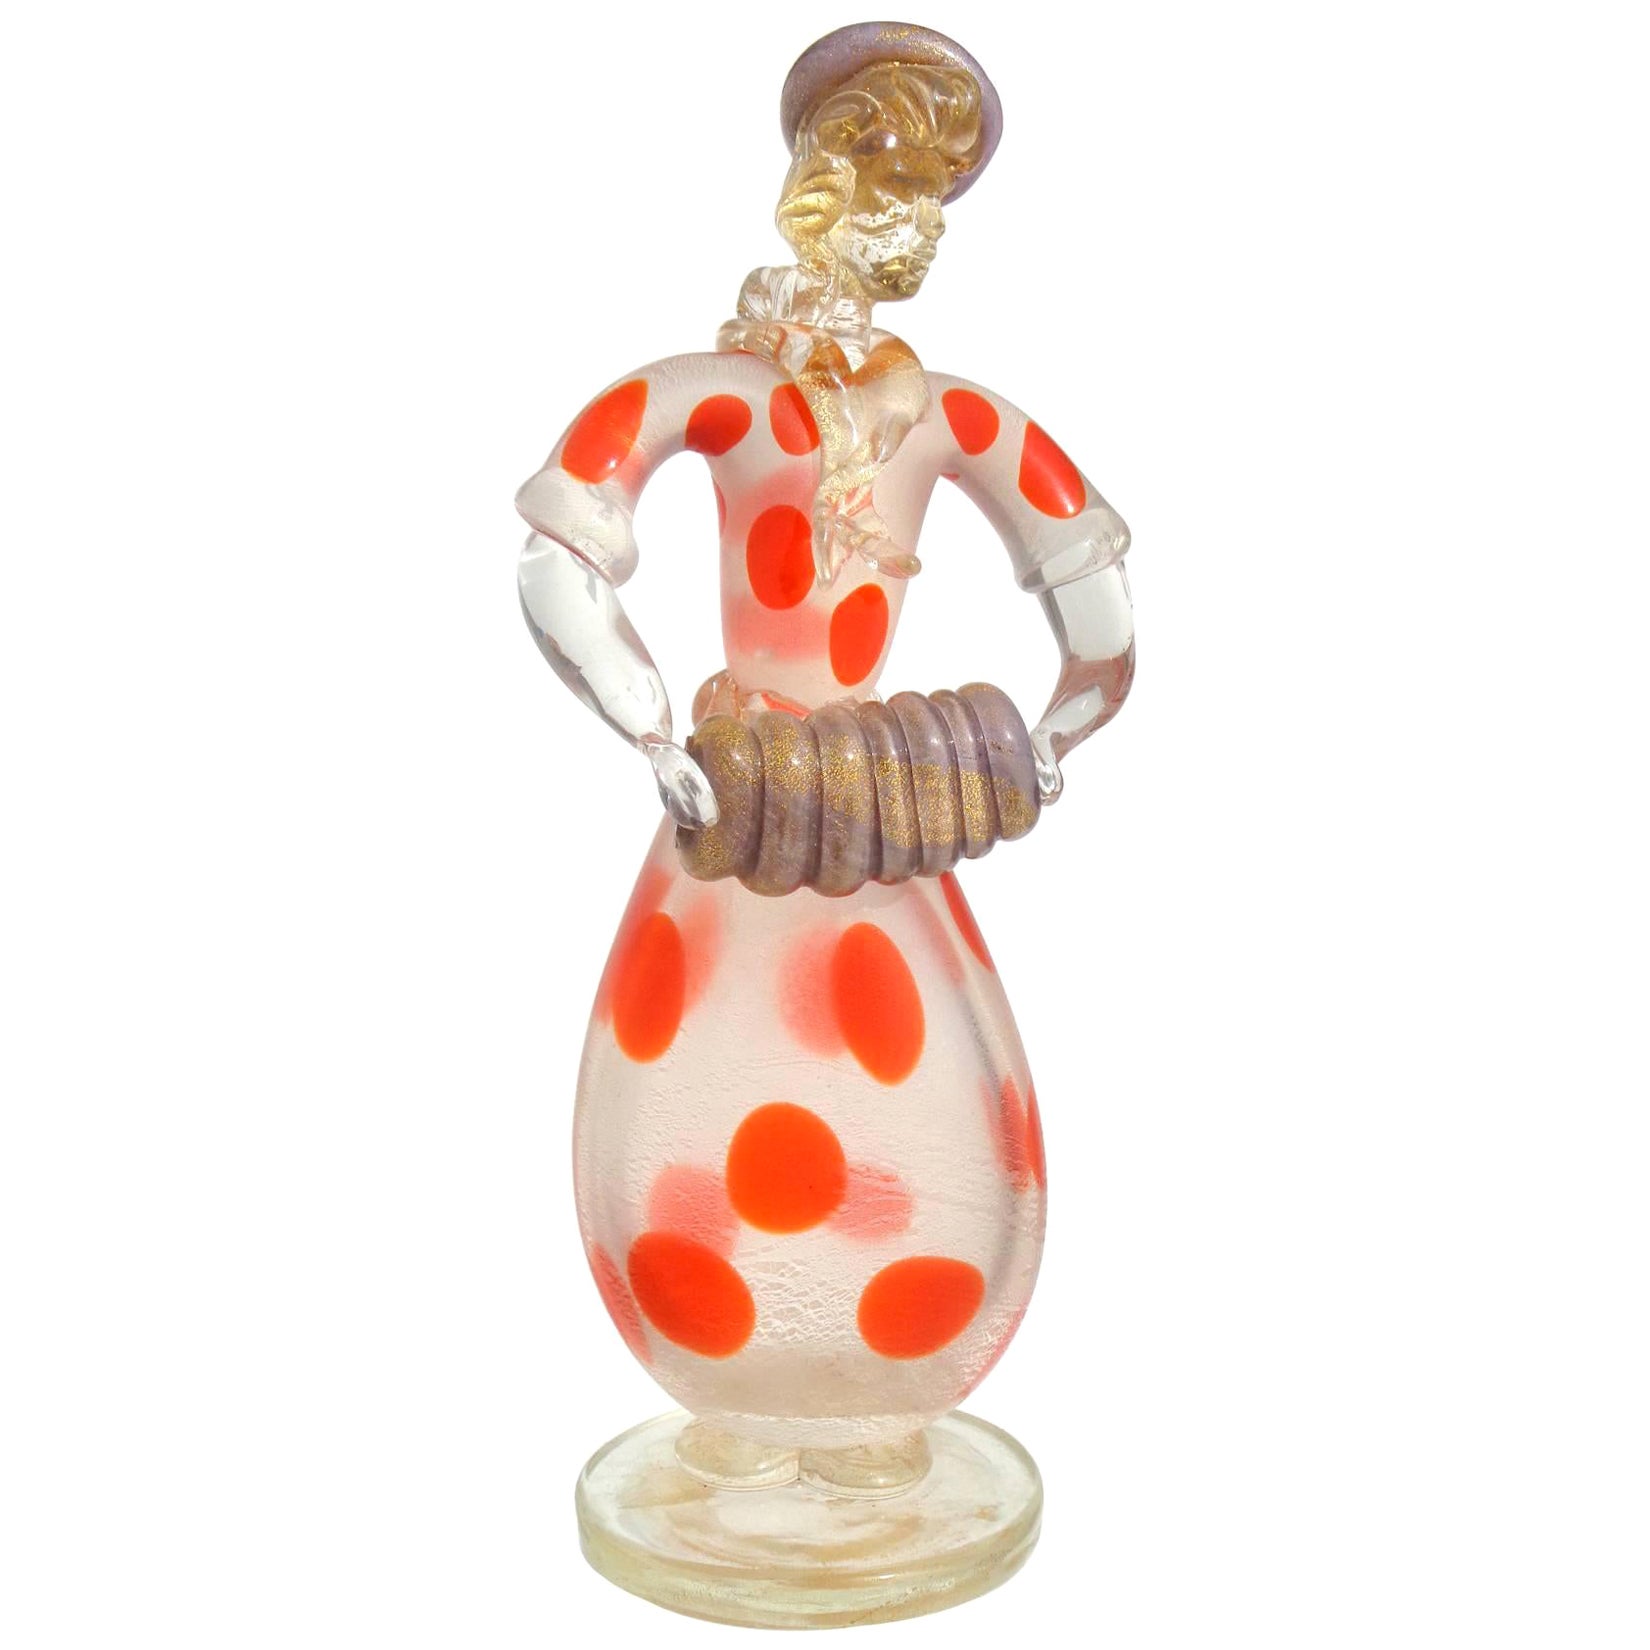 Murano Polka Dot Dress Italian Art Glass Parisian Woman Accordion Player Figure For Sale